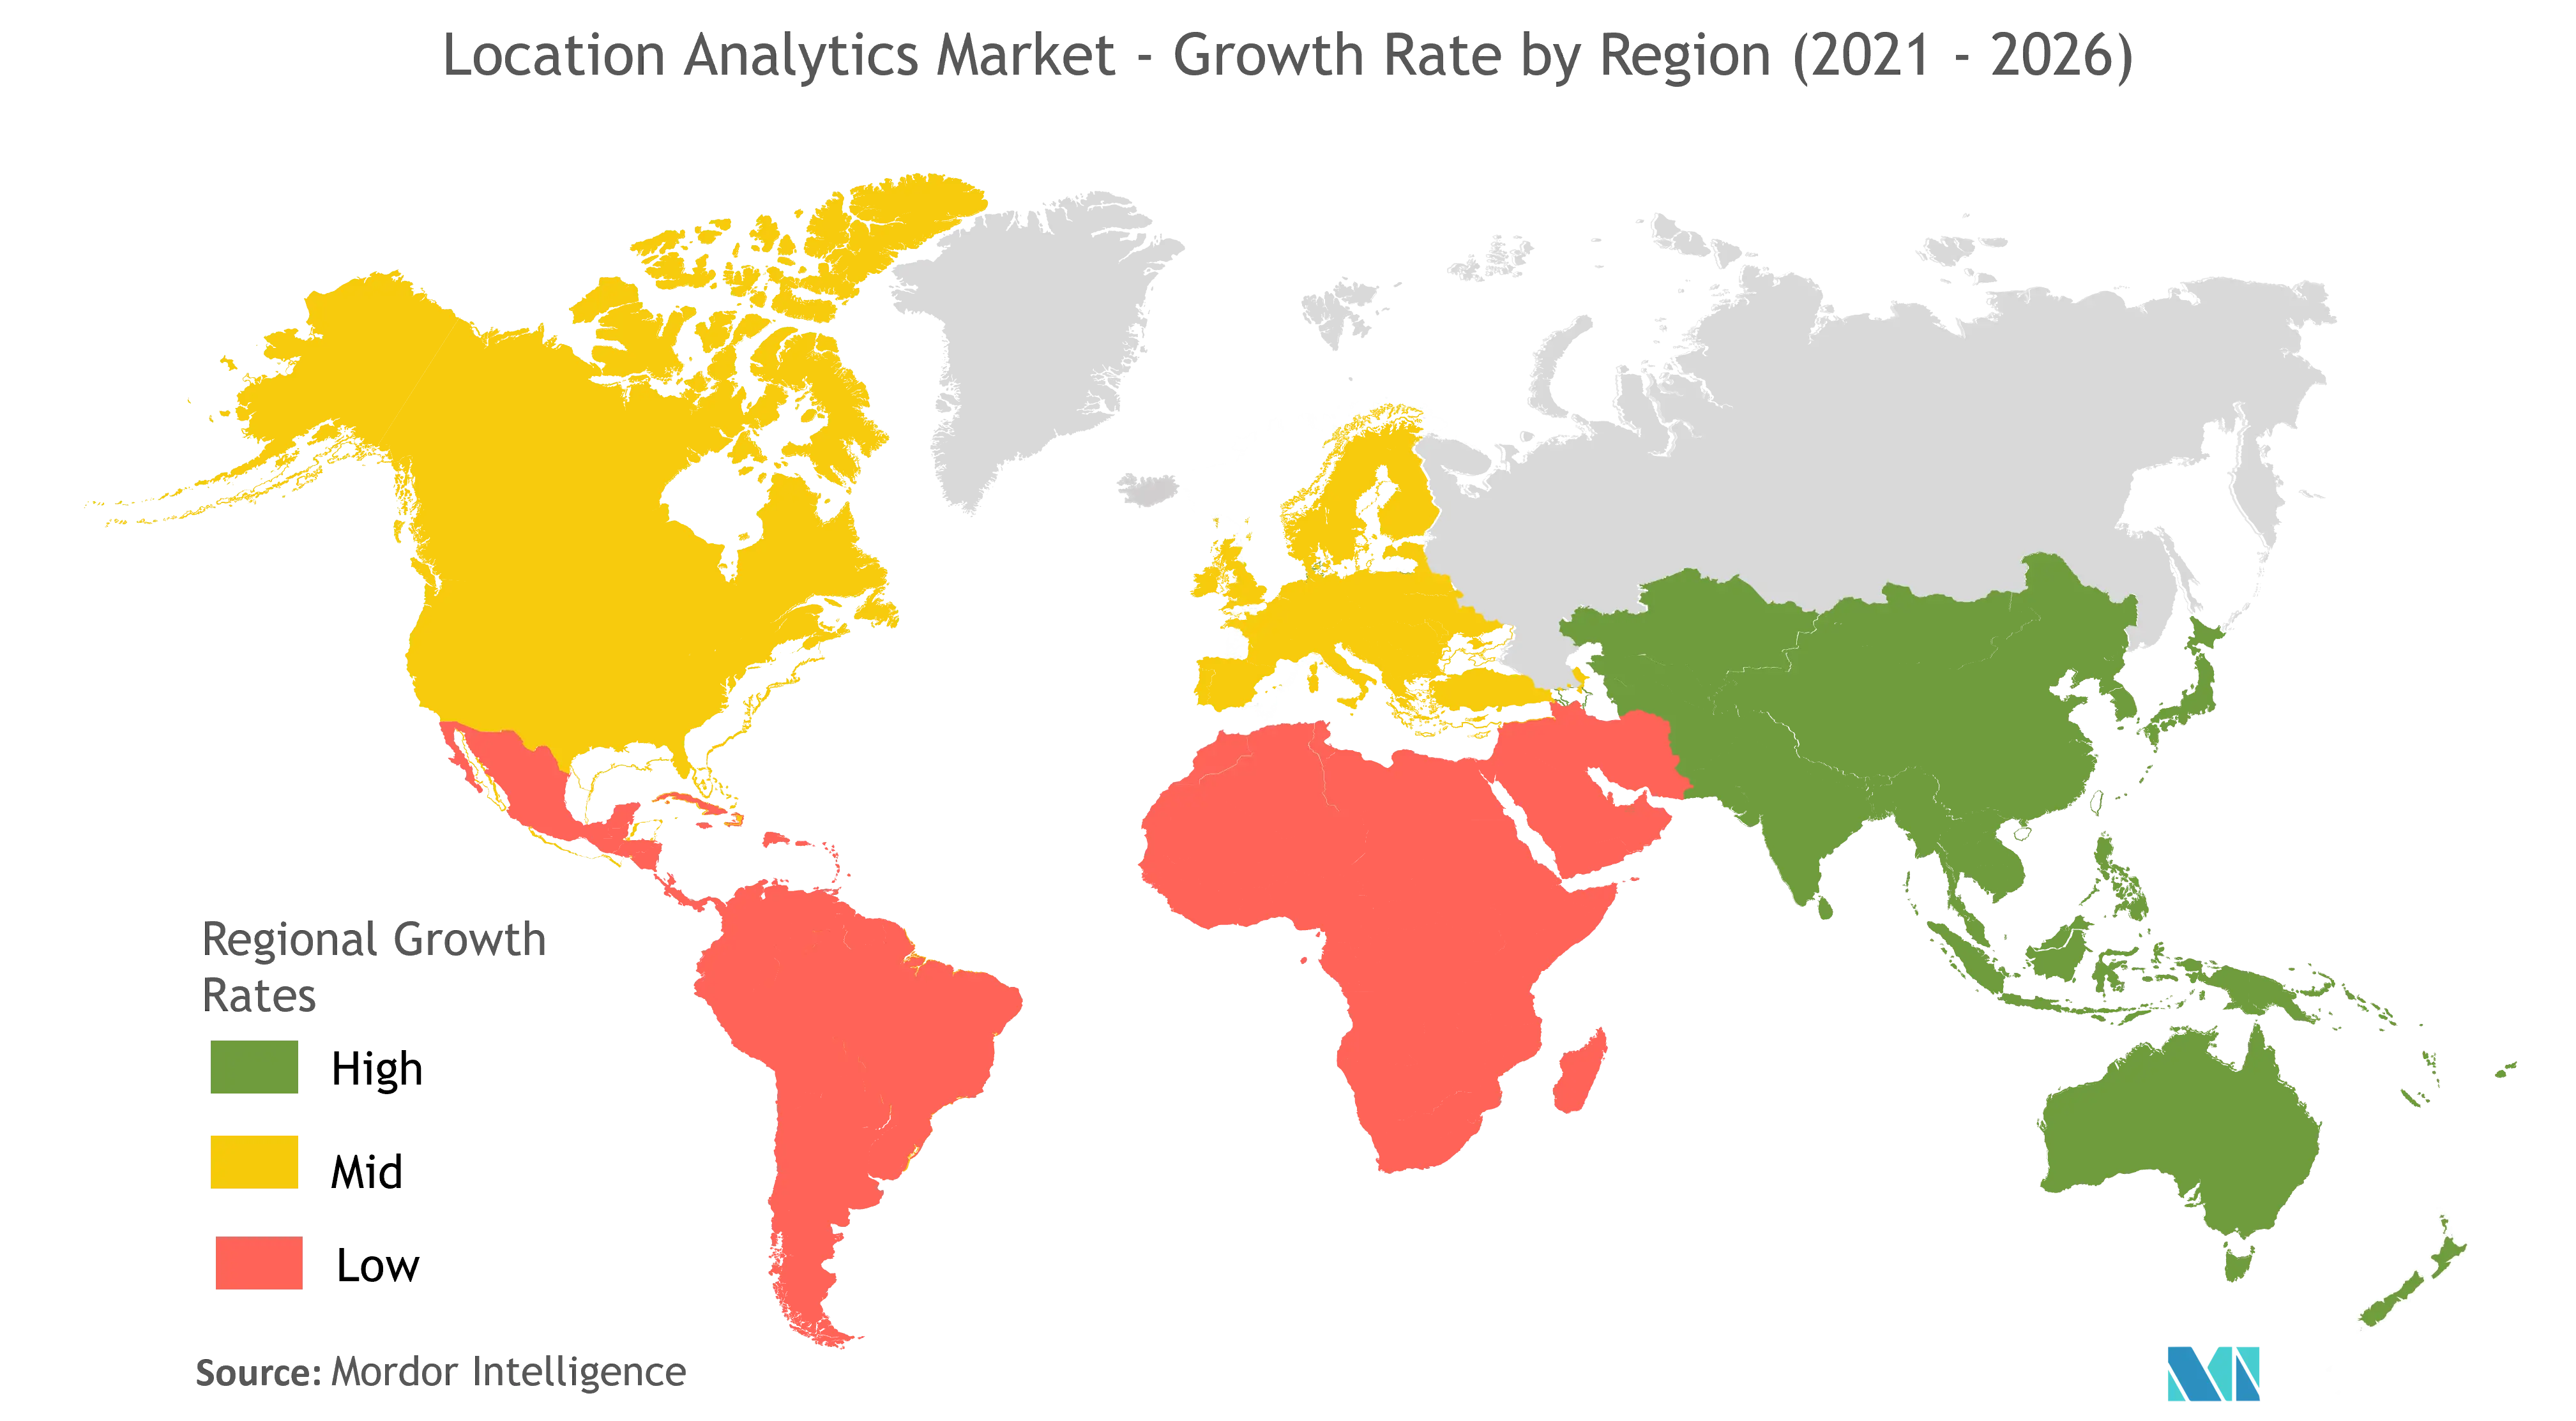 Location Analytics Market Growth